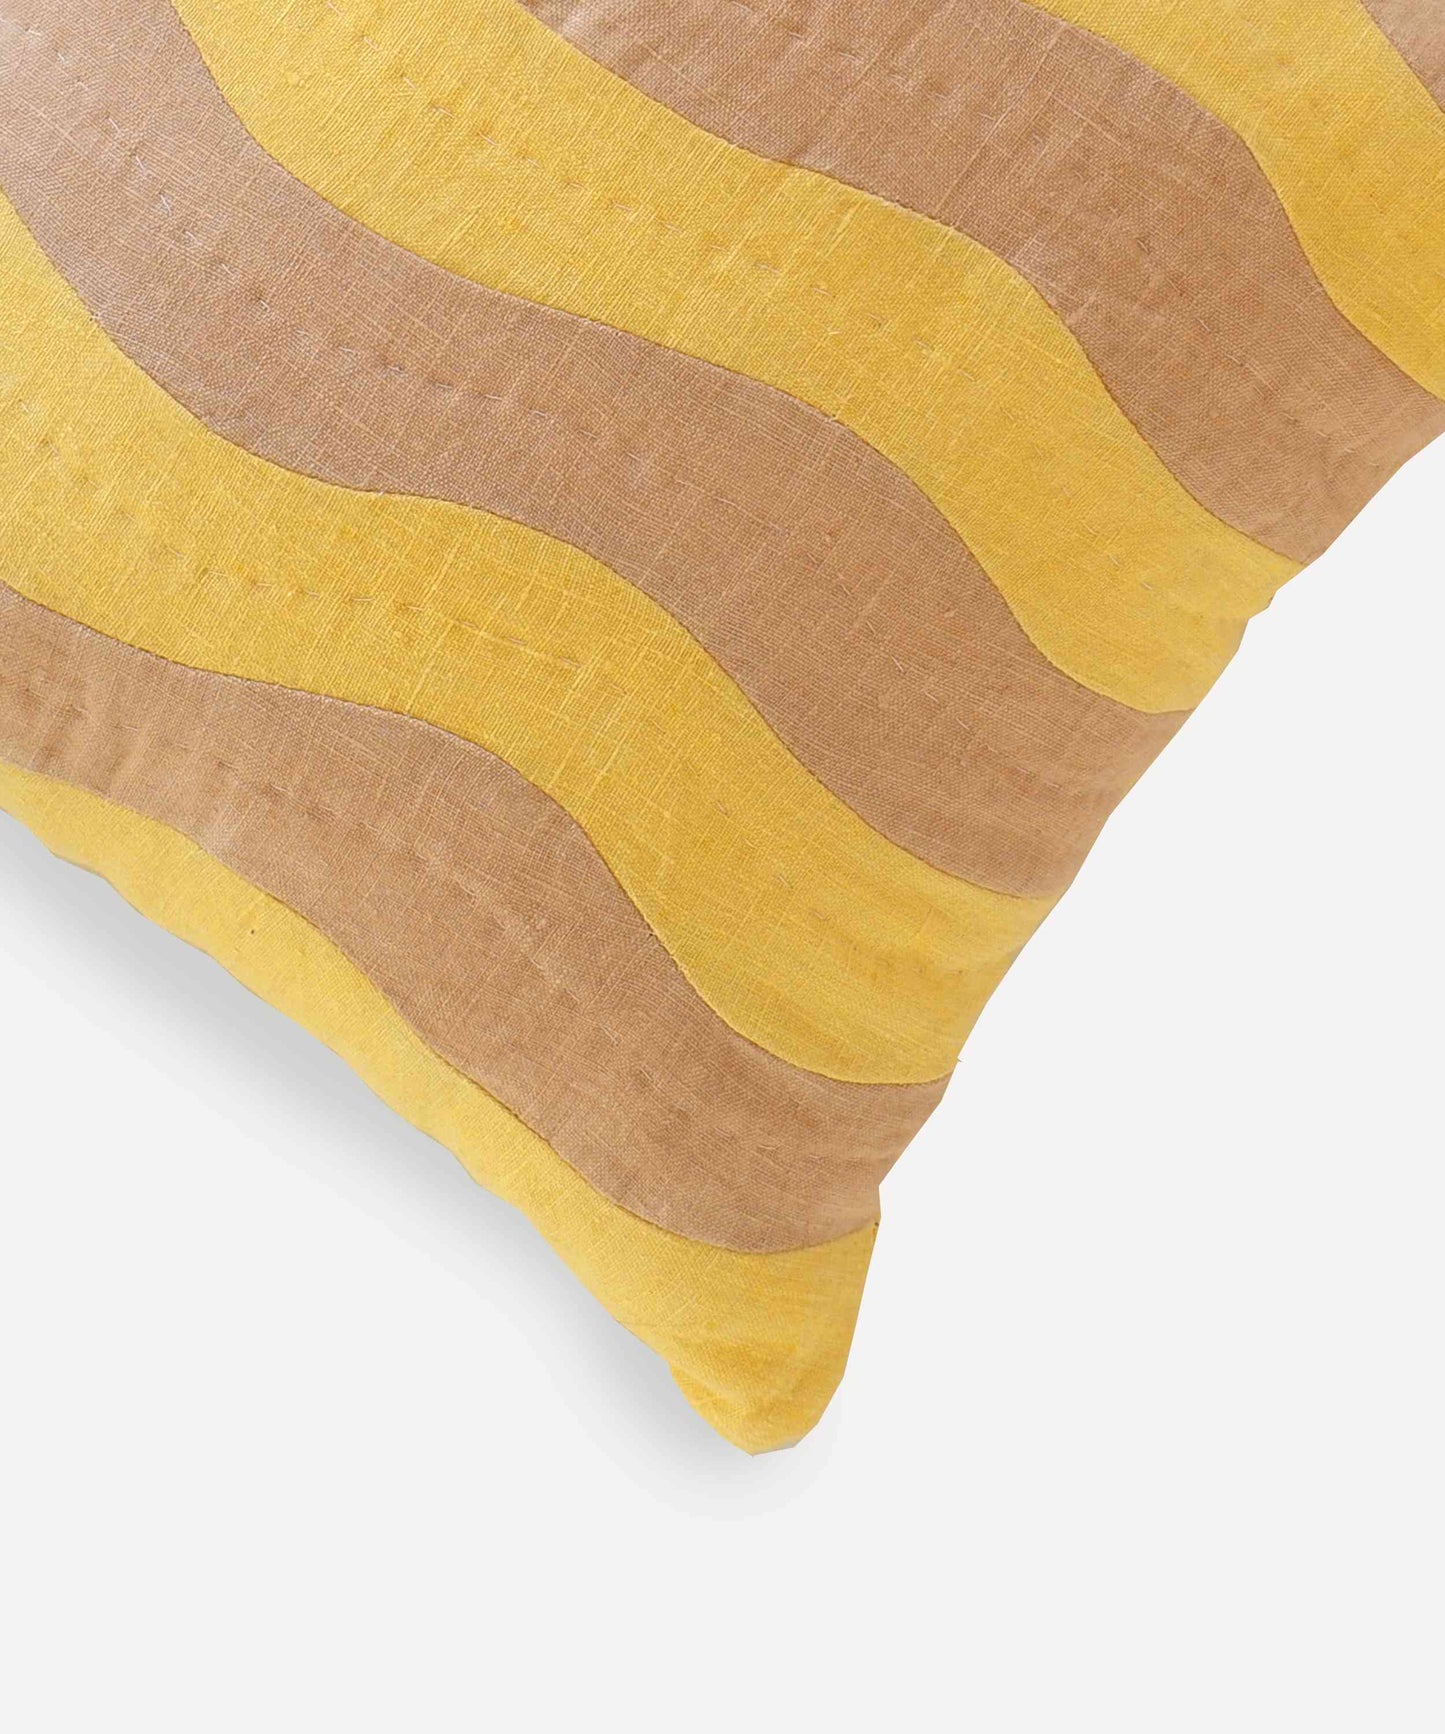 Square Dark Yellow & Beige Waves Cushion